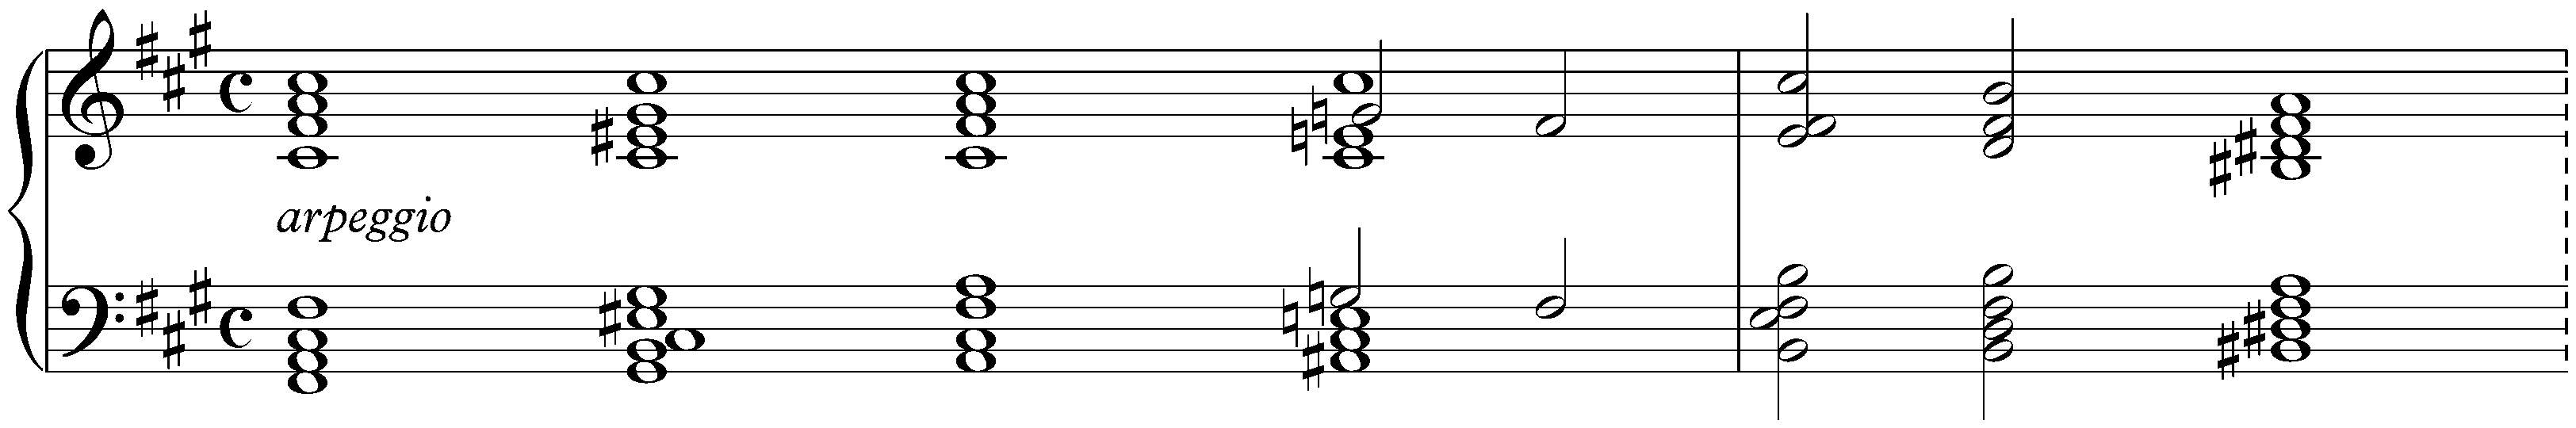 Prélude in F-sharp minor, HWV 570